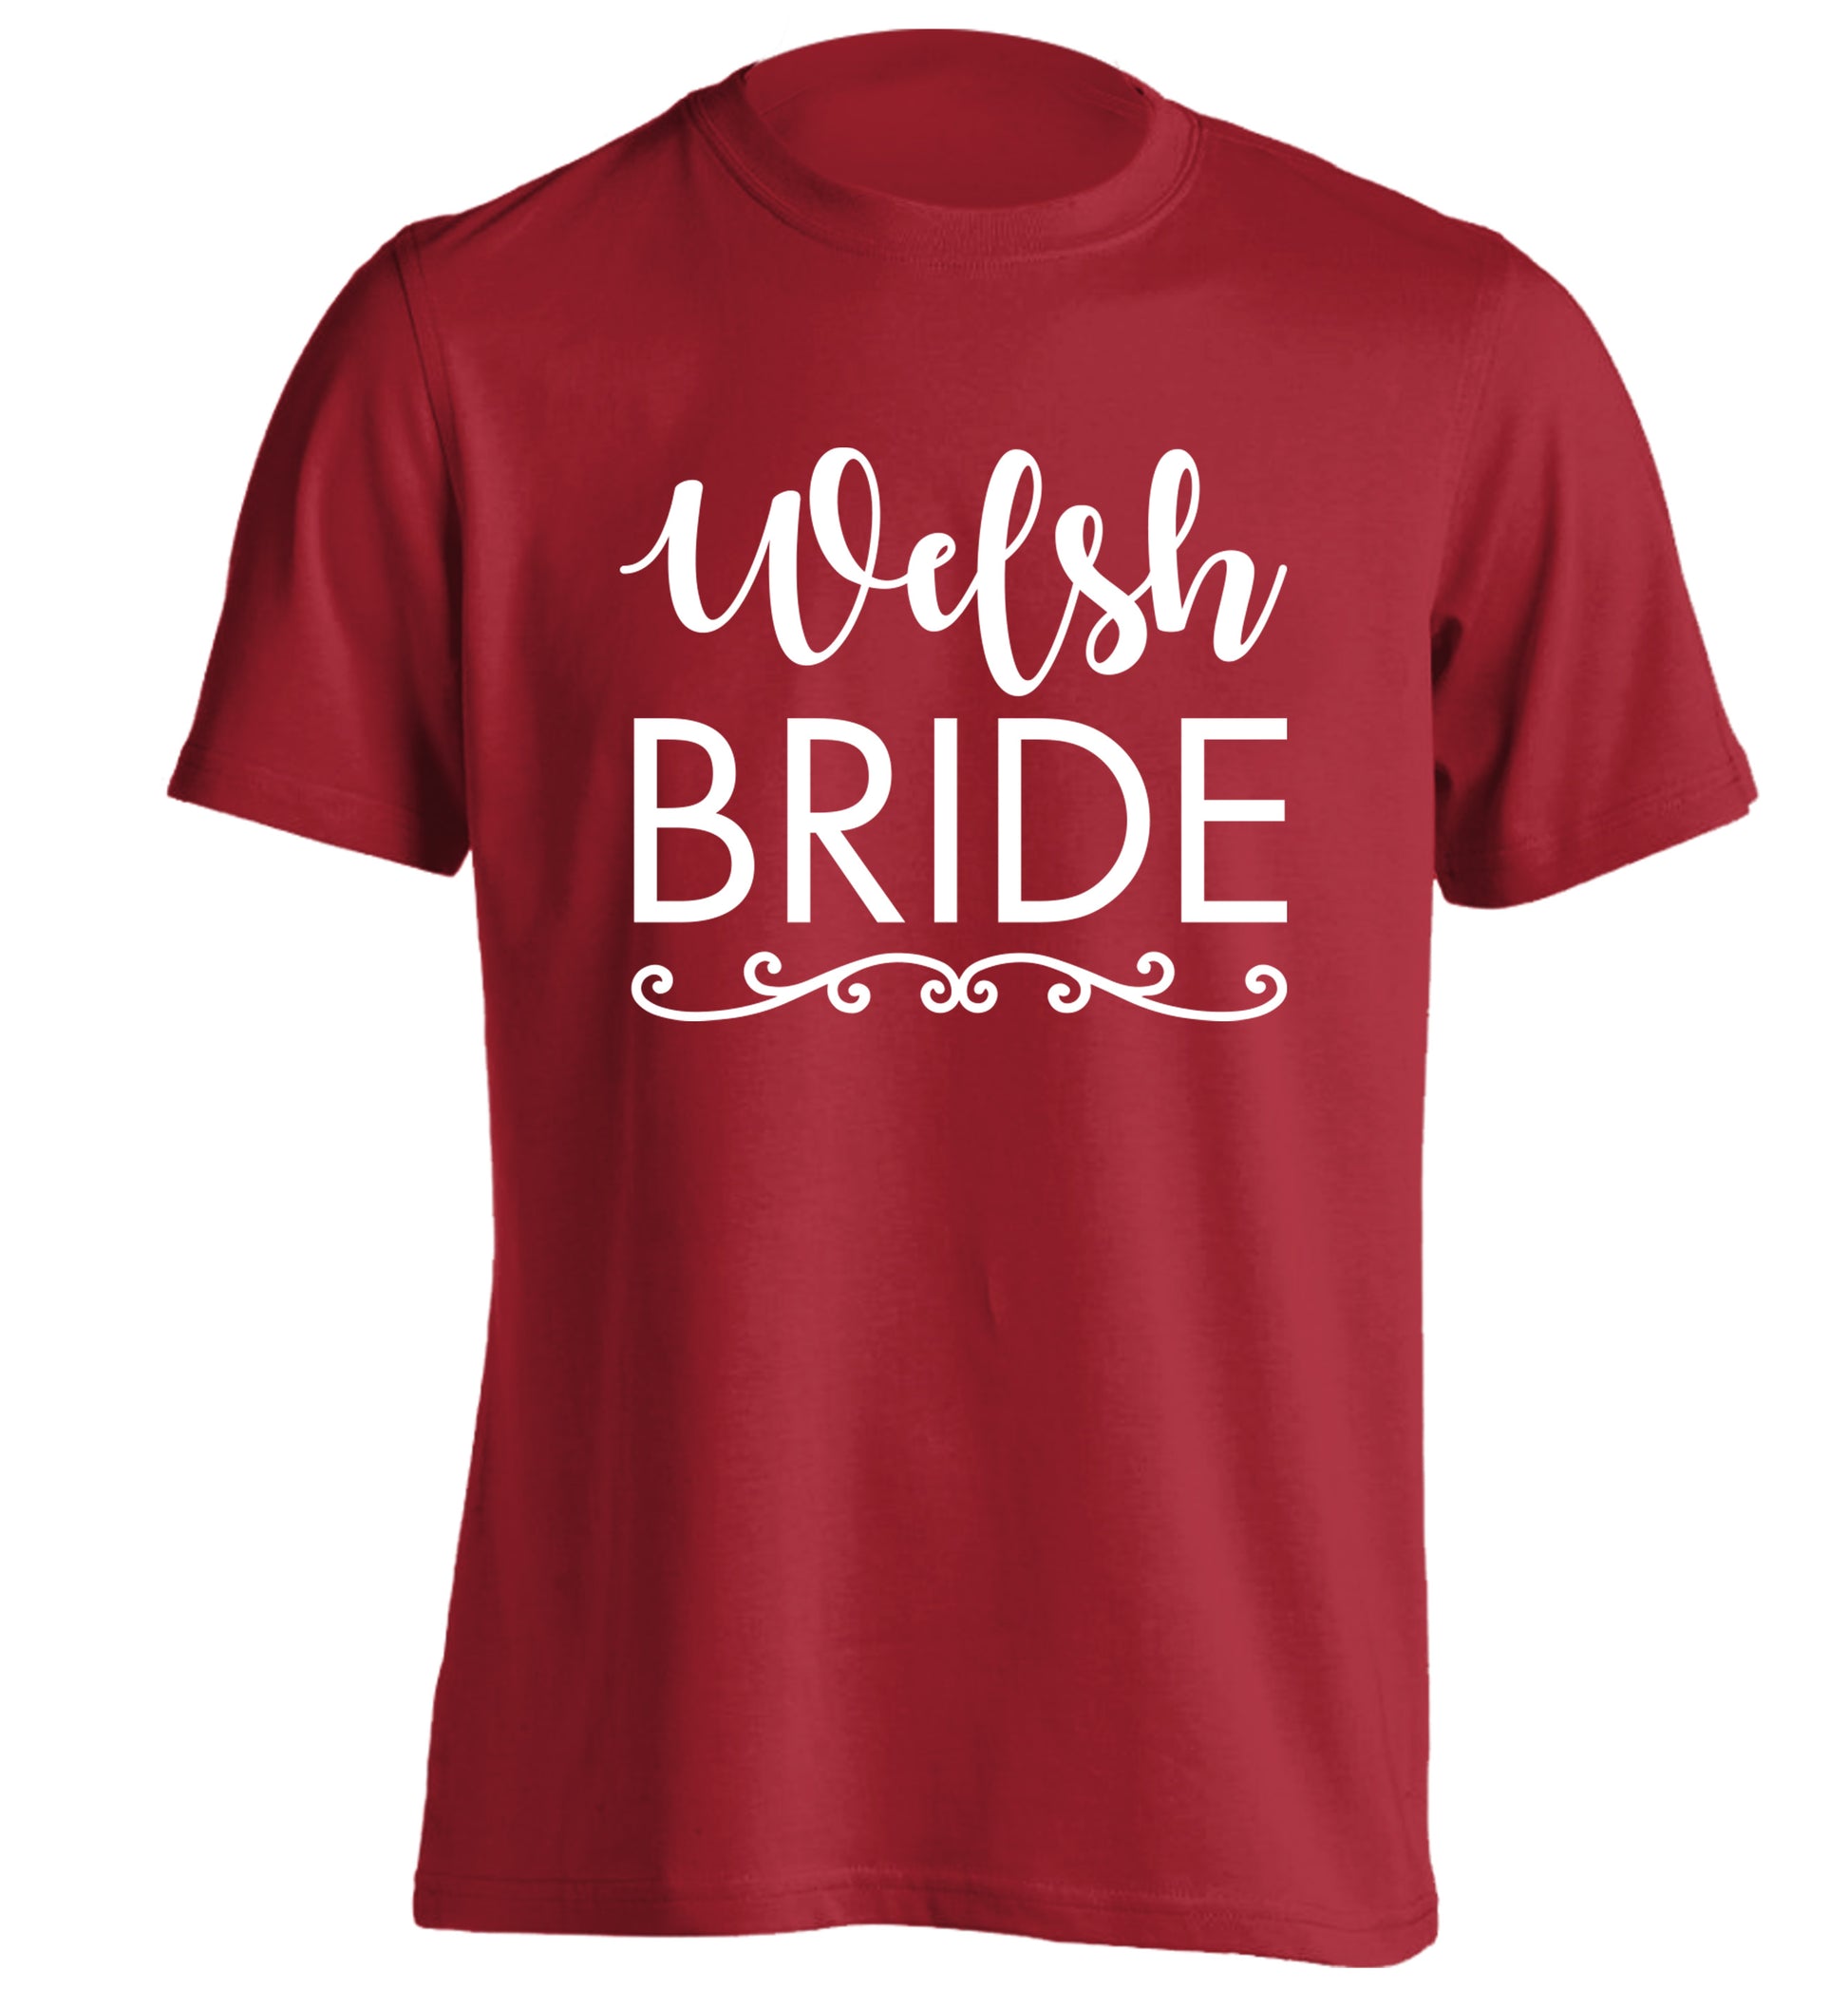 Welsh Bride adults unisex red Tshirt 2XL